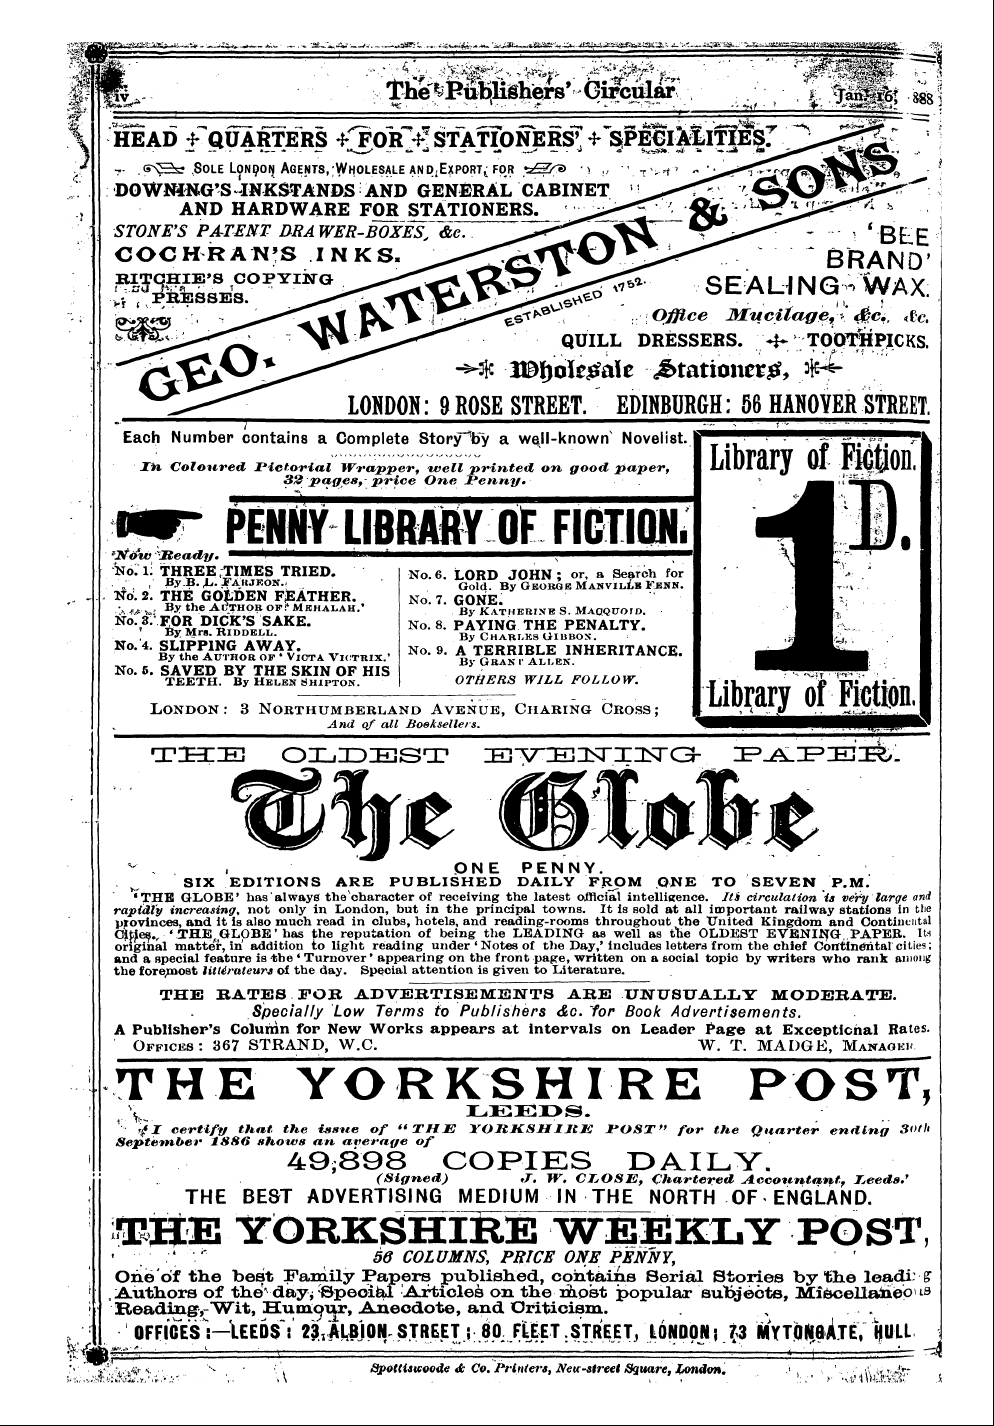 Publishers’ Circular (1880-1890): jS F Y, 1st edition - Ad10802